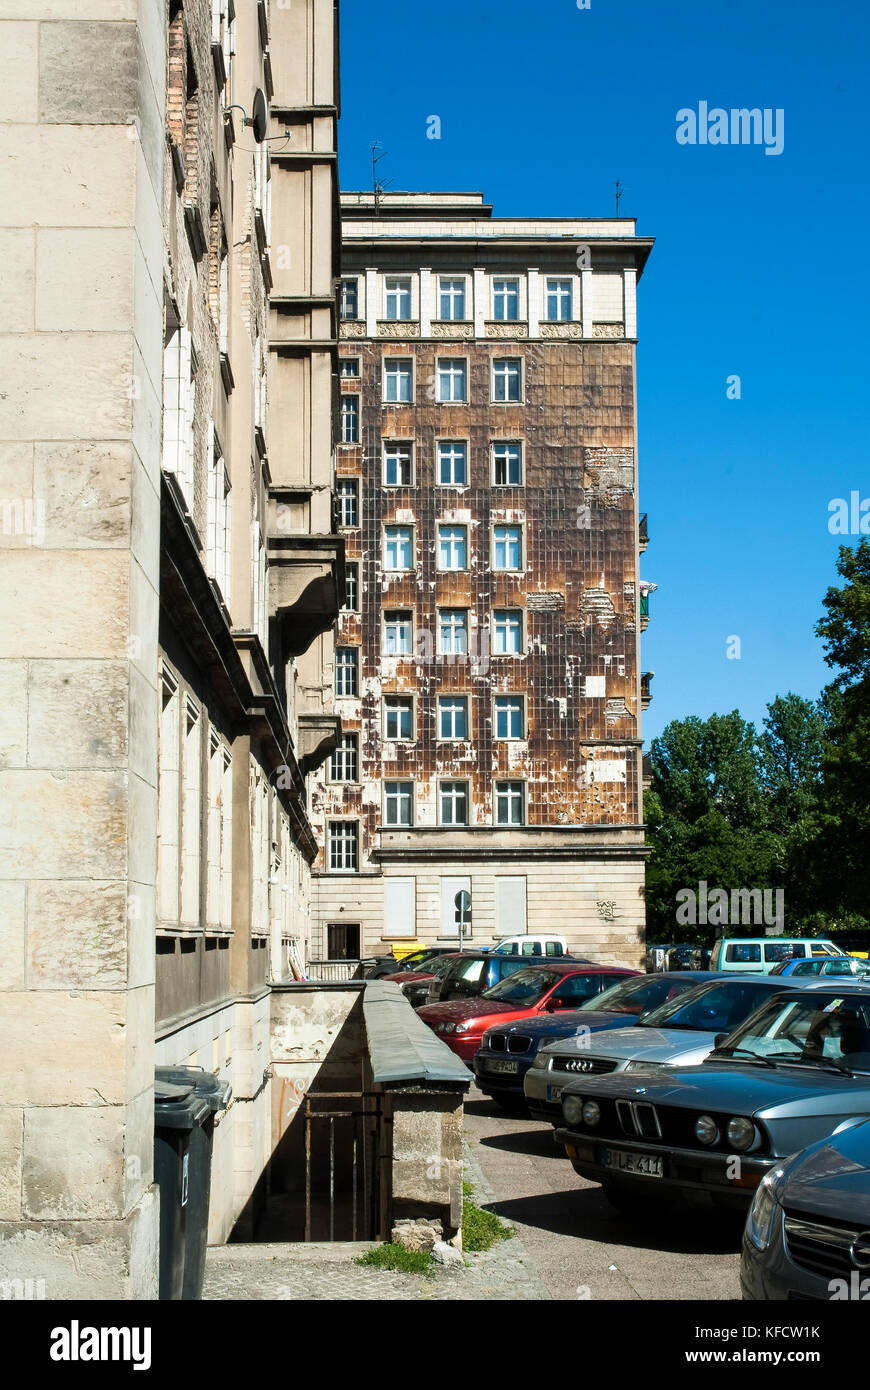 BERLIN-JUNE 3: Typical building with cars parked,former East Berlin , Friedrichshain neighborhood,Berlin,Germany,on June 6,2011. Stock Photo